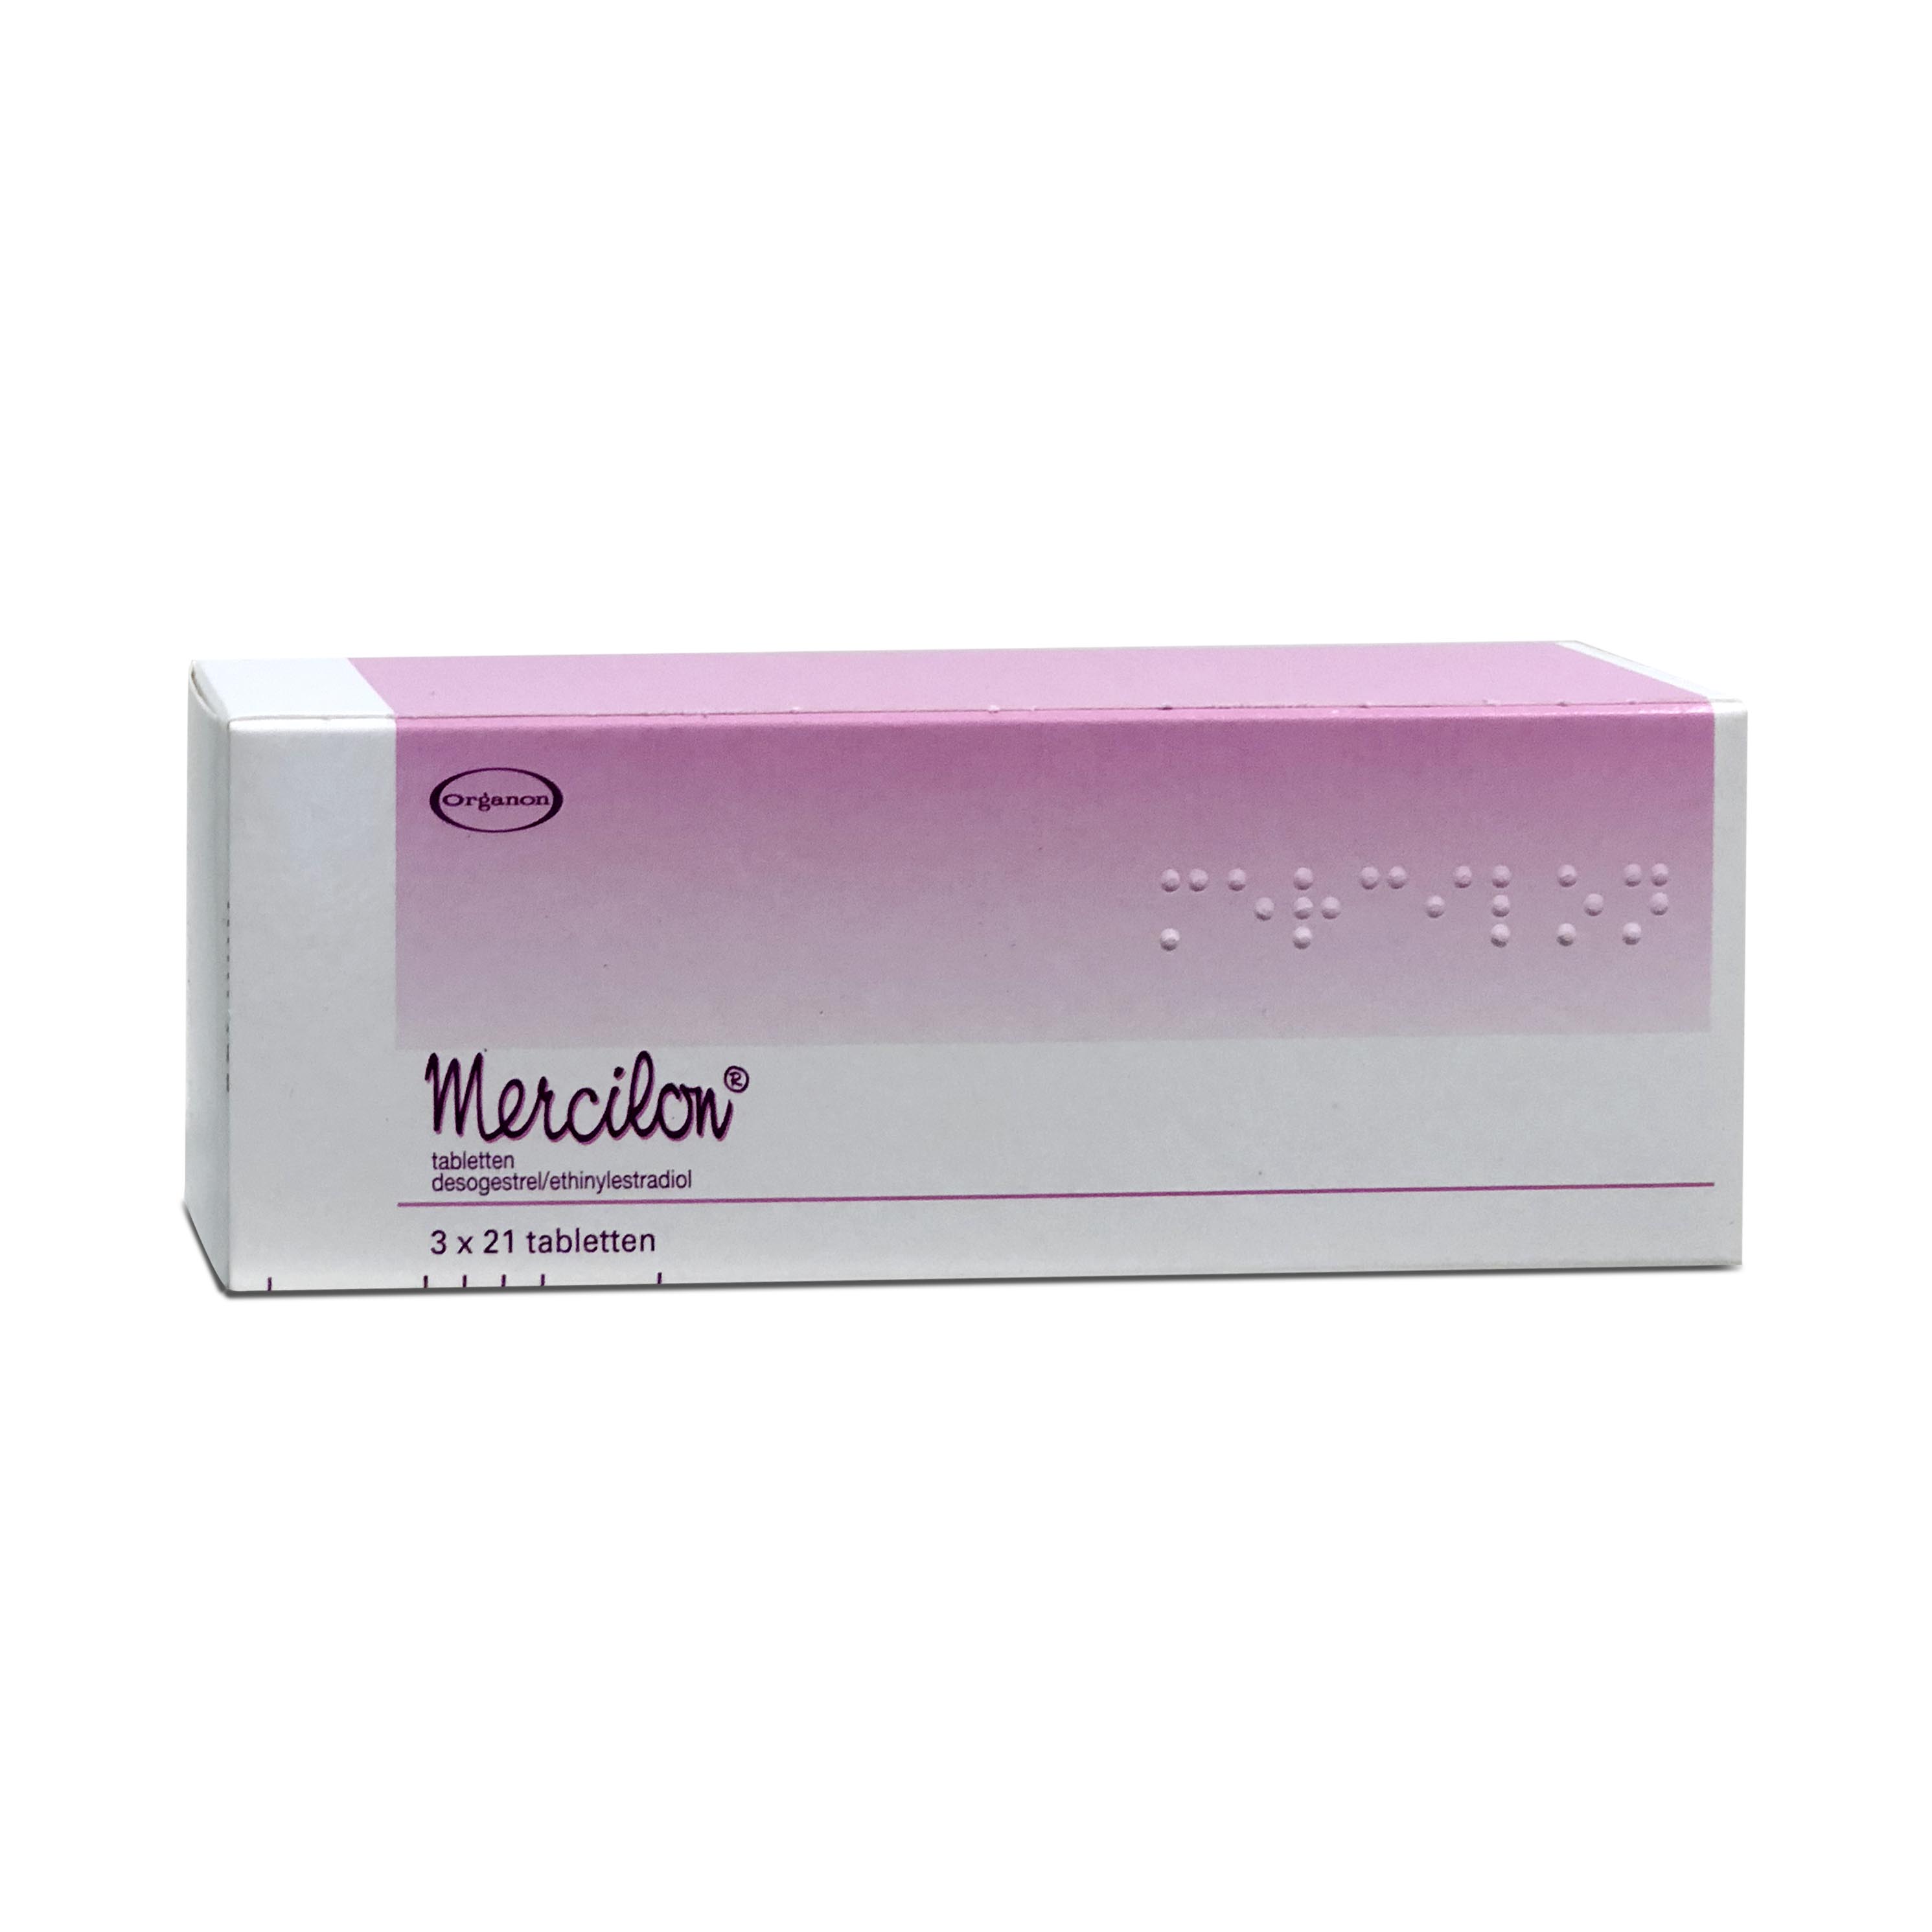 Mercilon 3 x 21 tablets Organon pink box